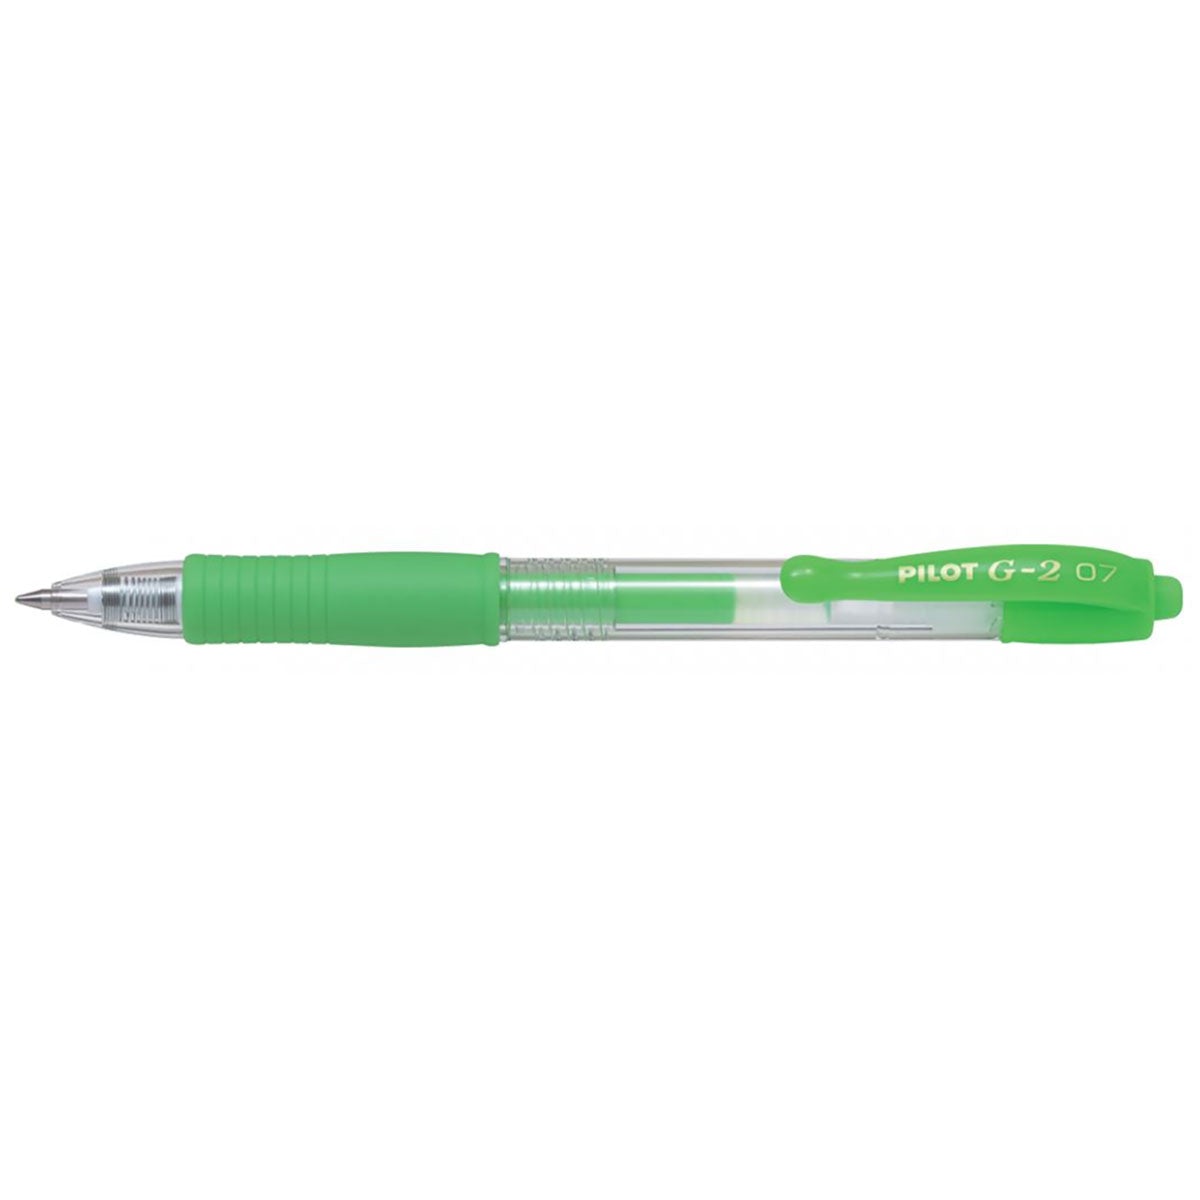 Mr. Pen- Fineliner Pens, 12 Pack, Pens Fine Point, Algeria